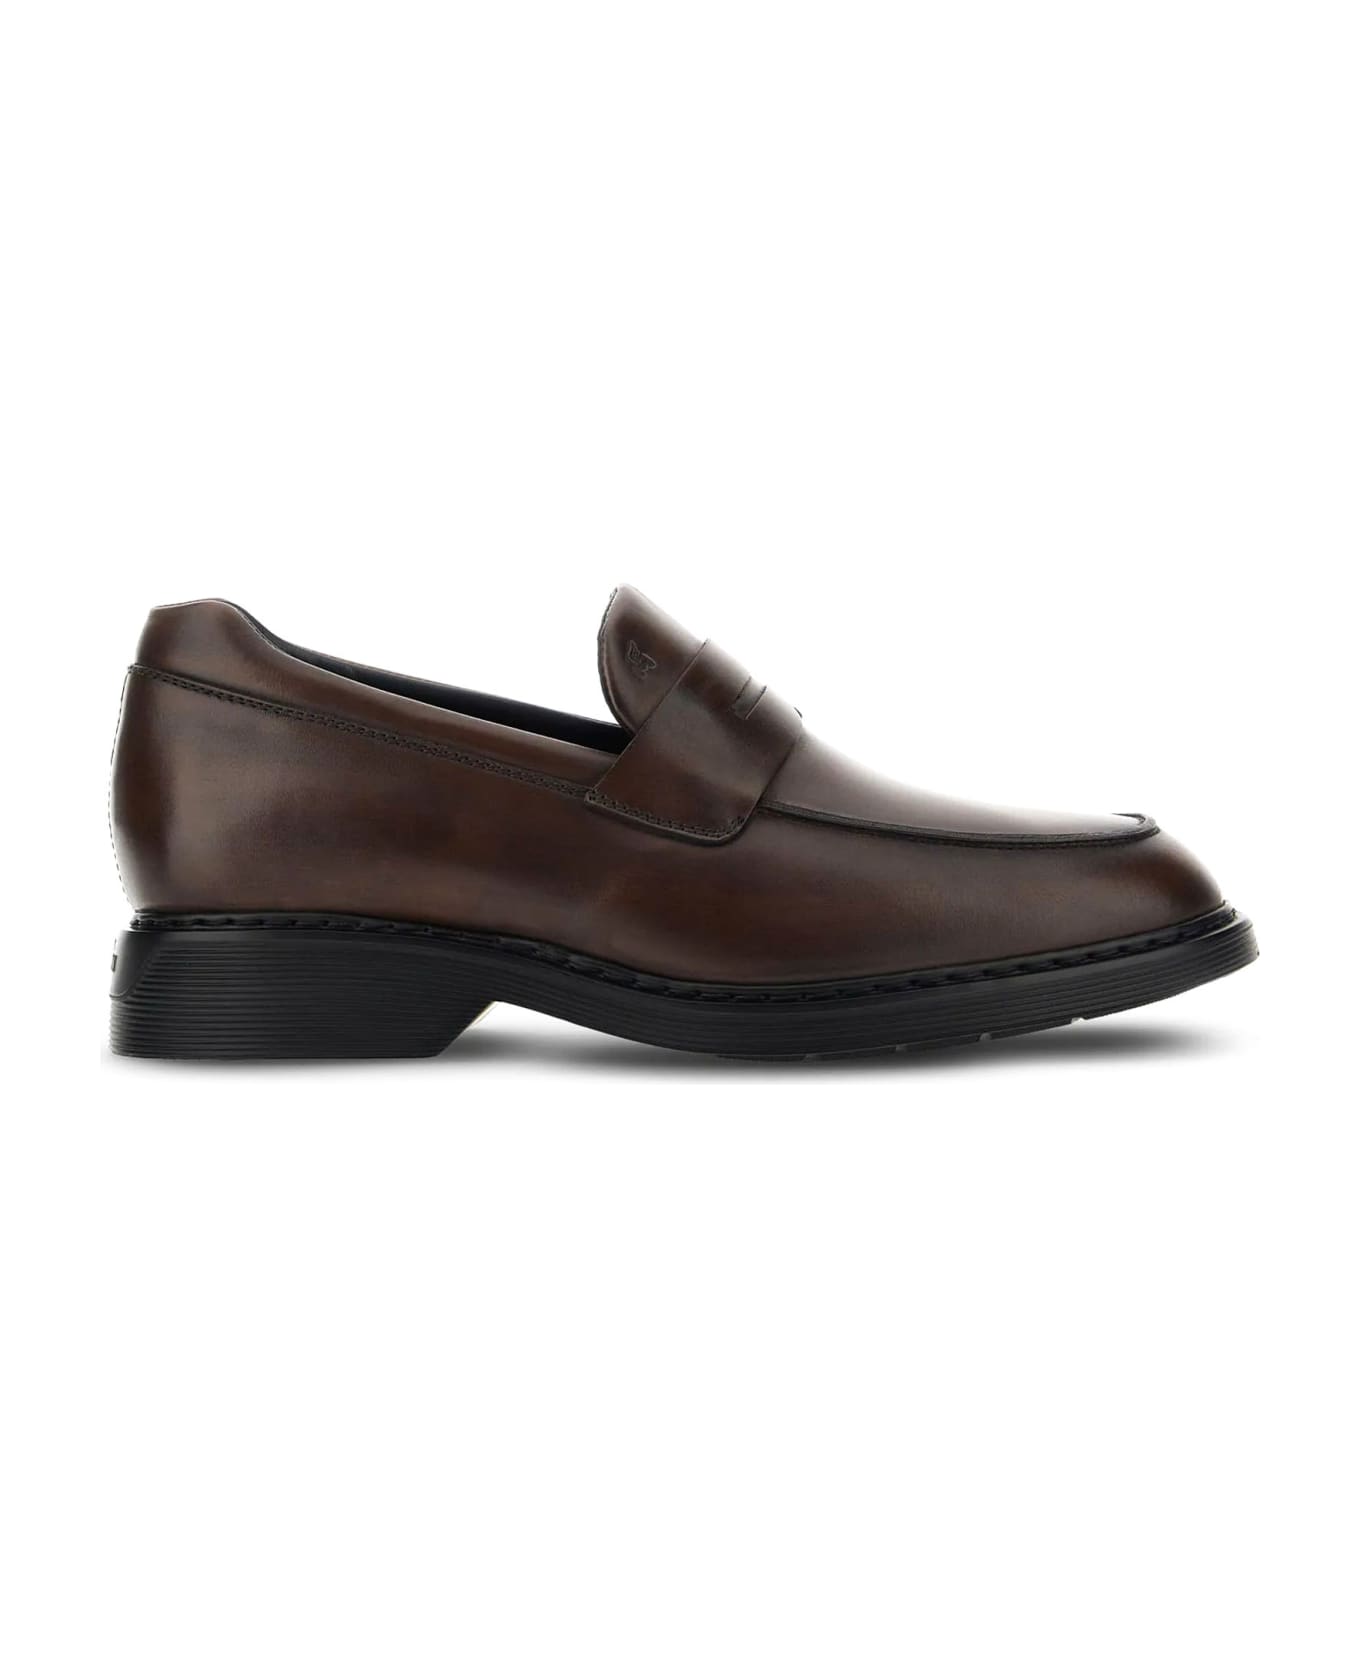 Hogan Flat Shoes Brown - Brown